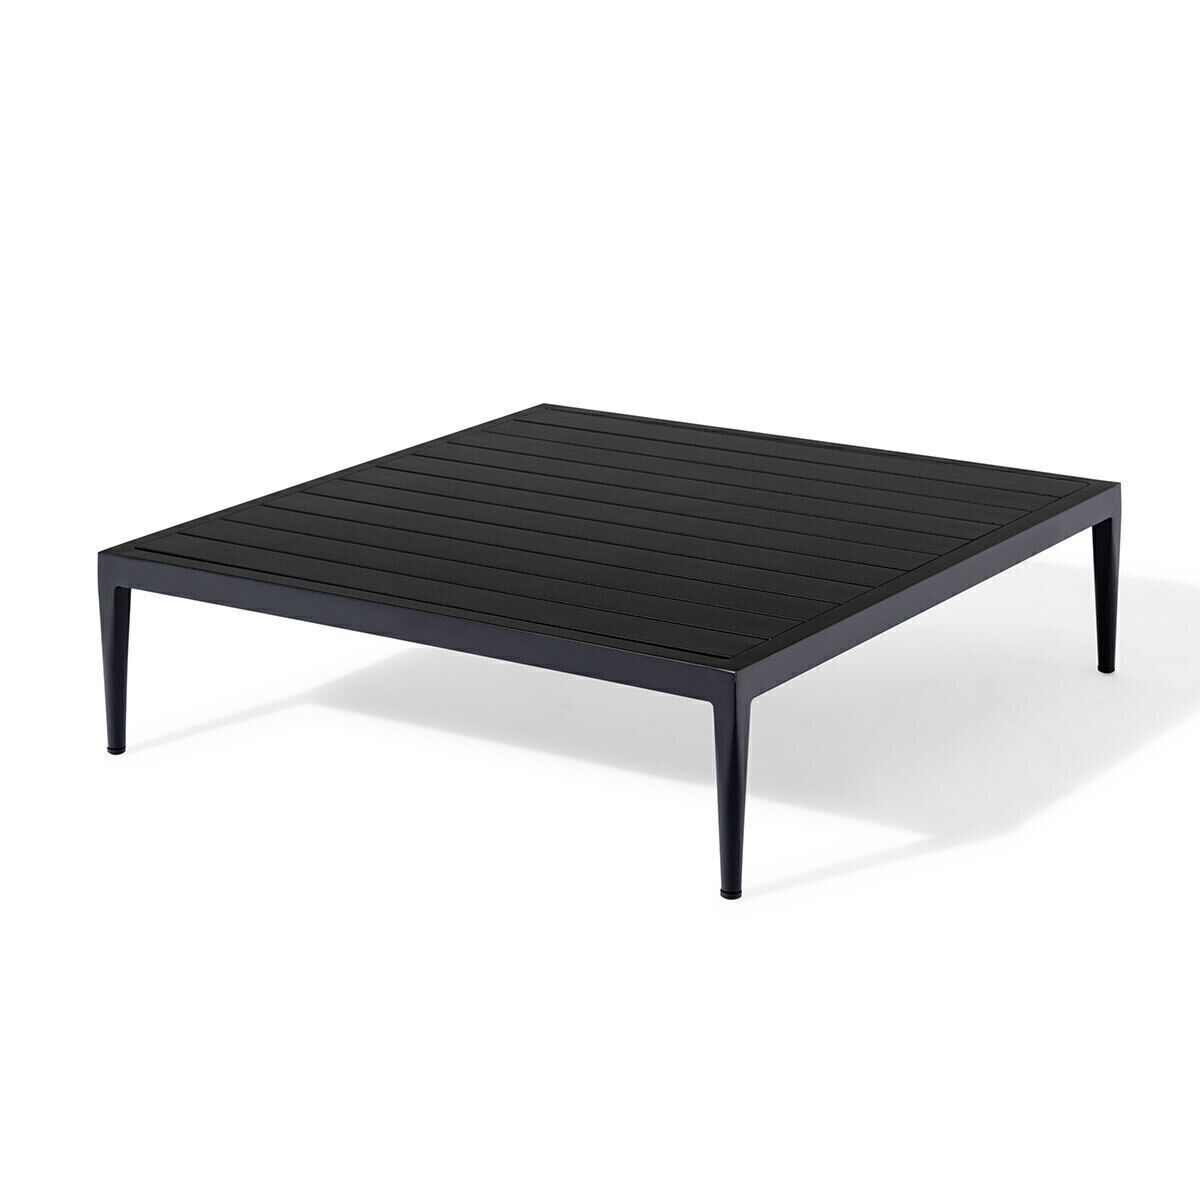 Maze - Outdoor Fabric Eve 3 Seat Sofa Set - Charcoal product image